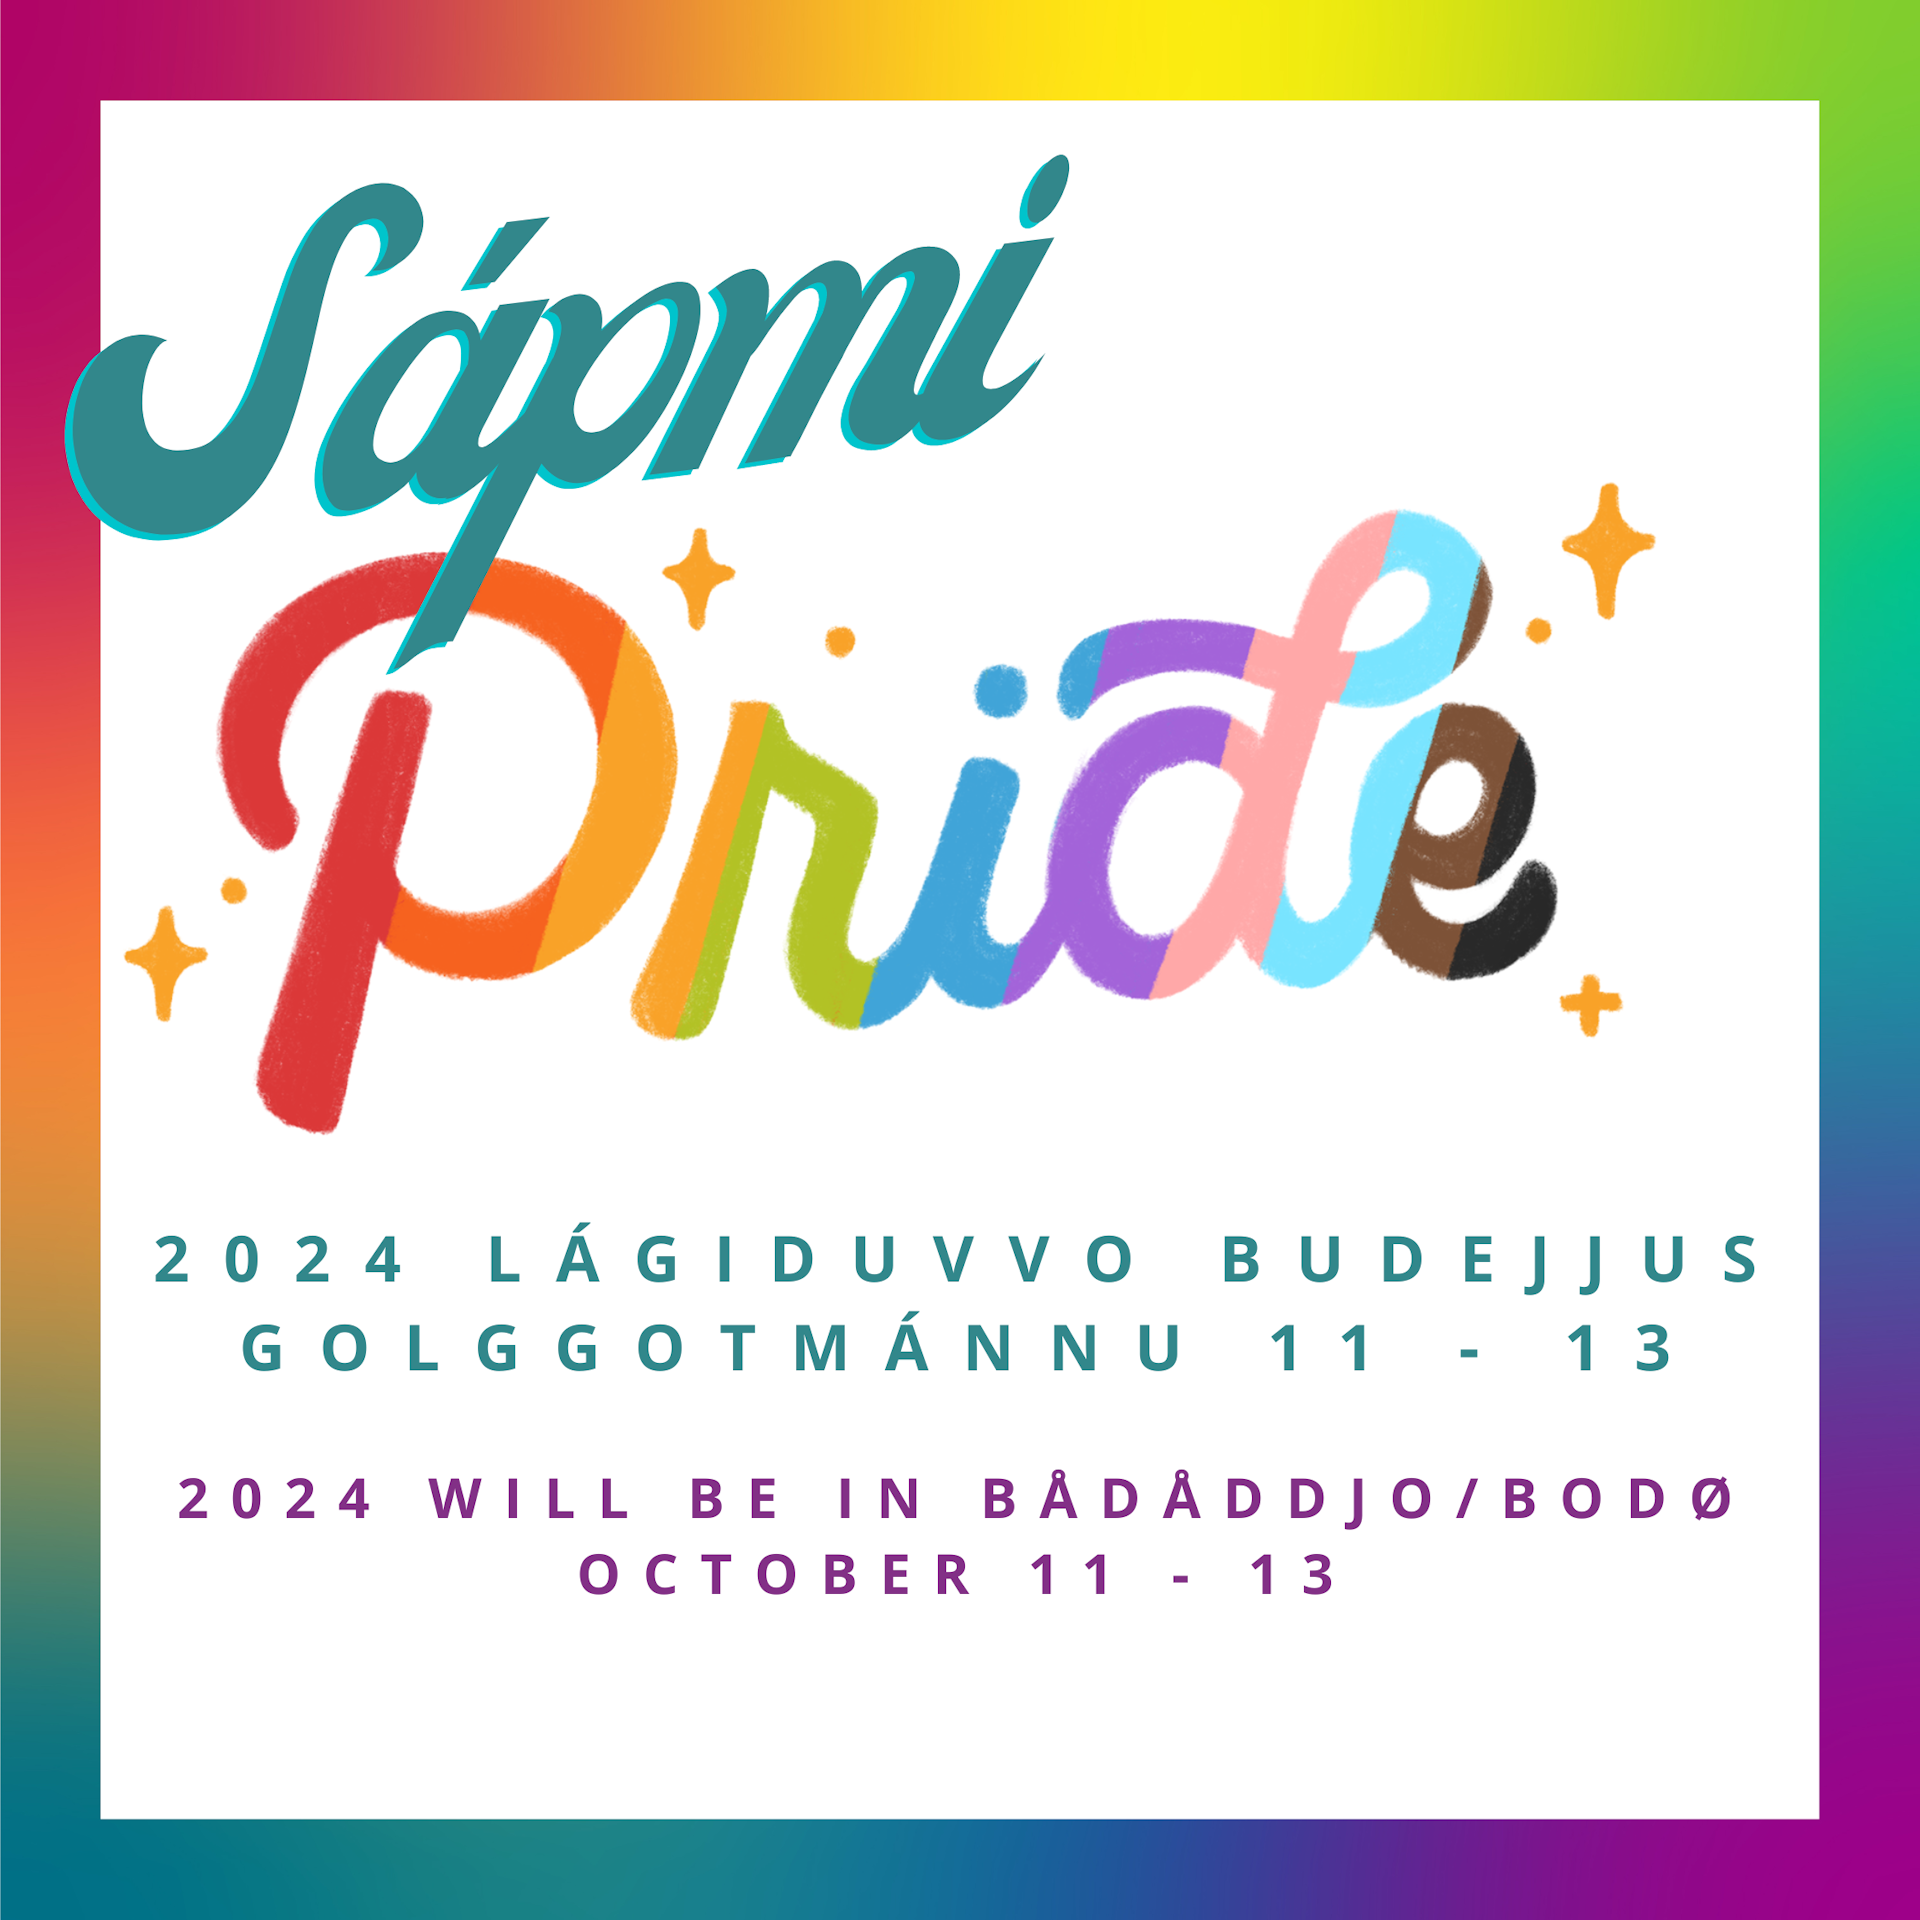 A poster saying "Sápmi Pride 2024 will be in bådåddjo/Bodø October 11.-13.